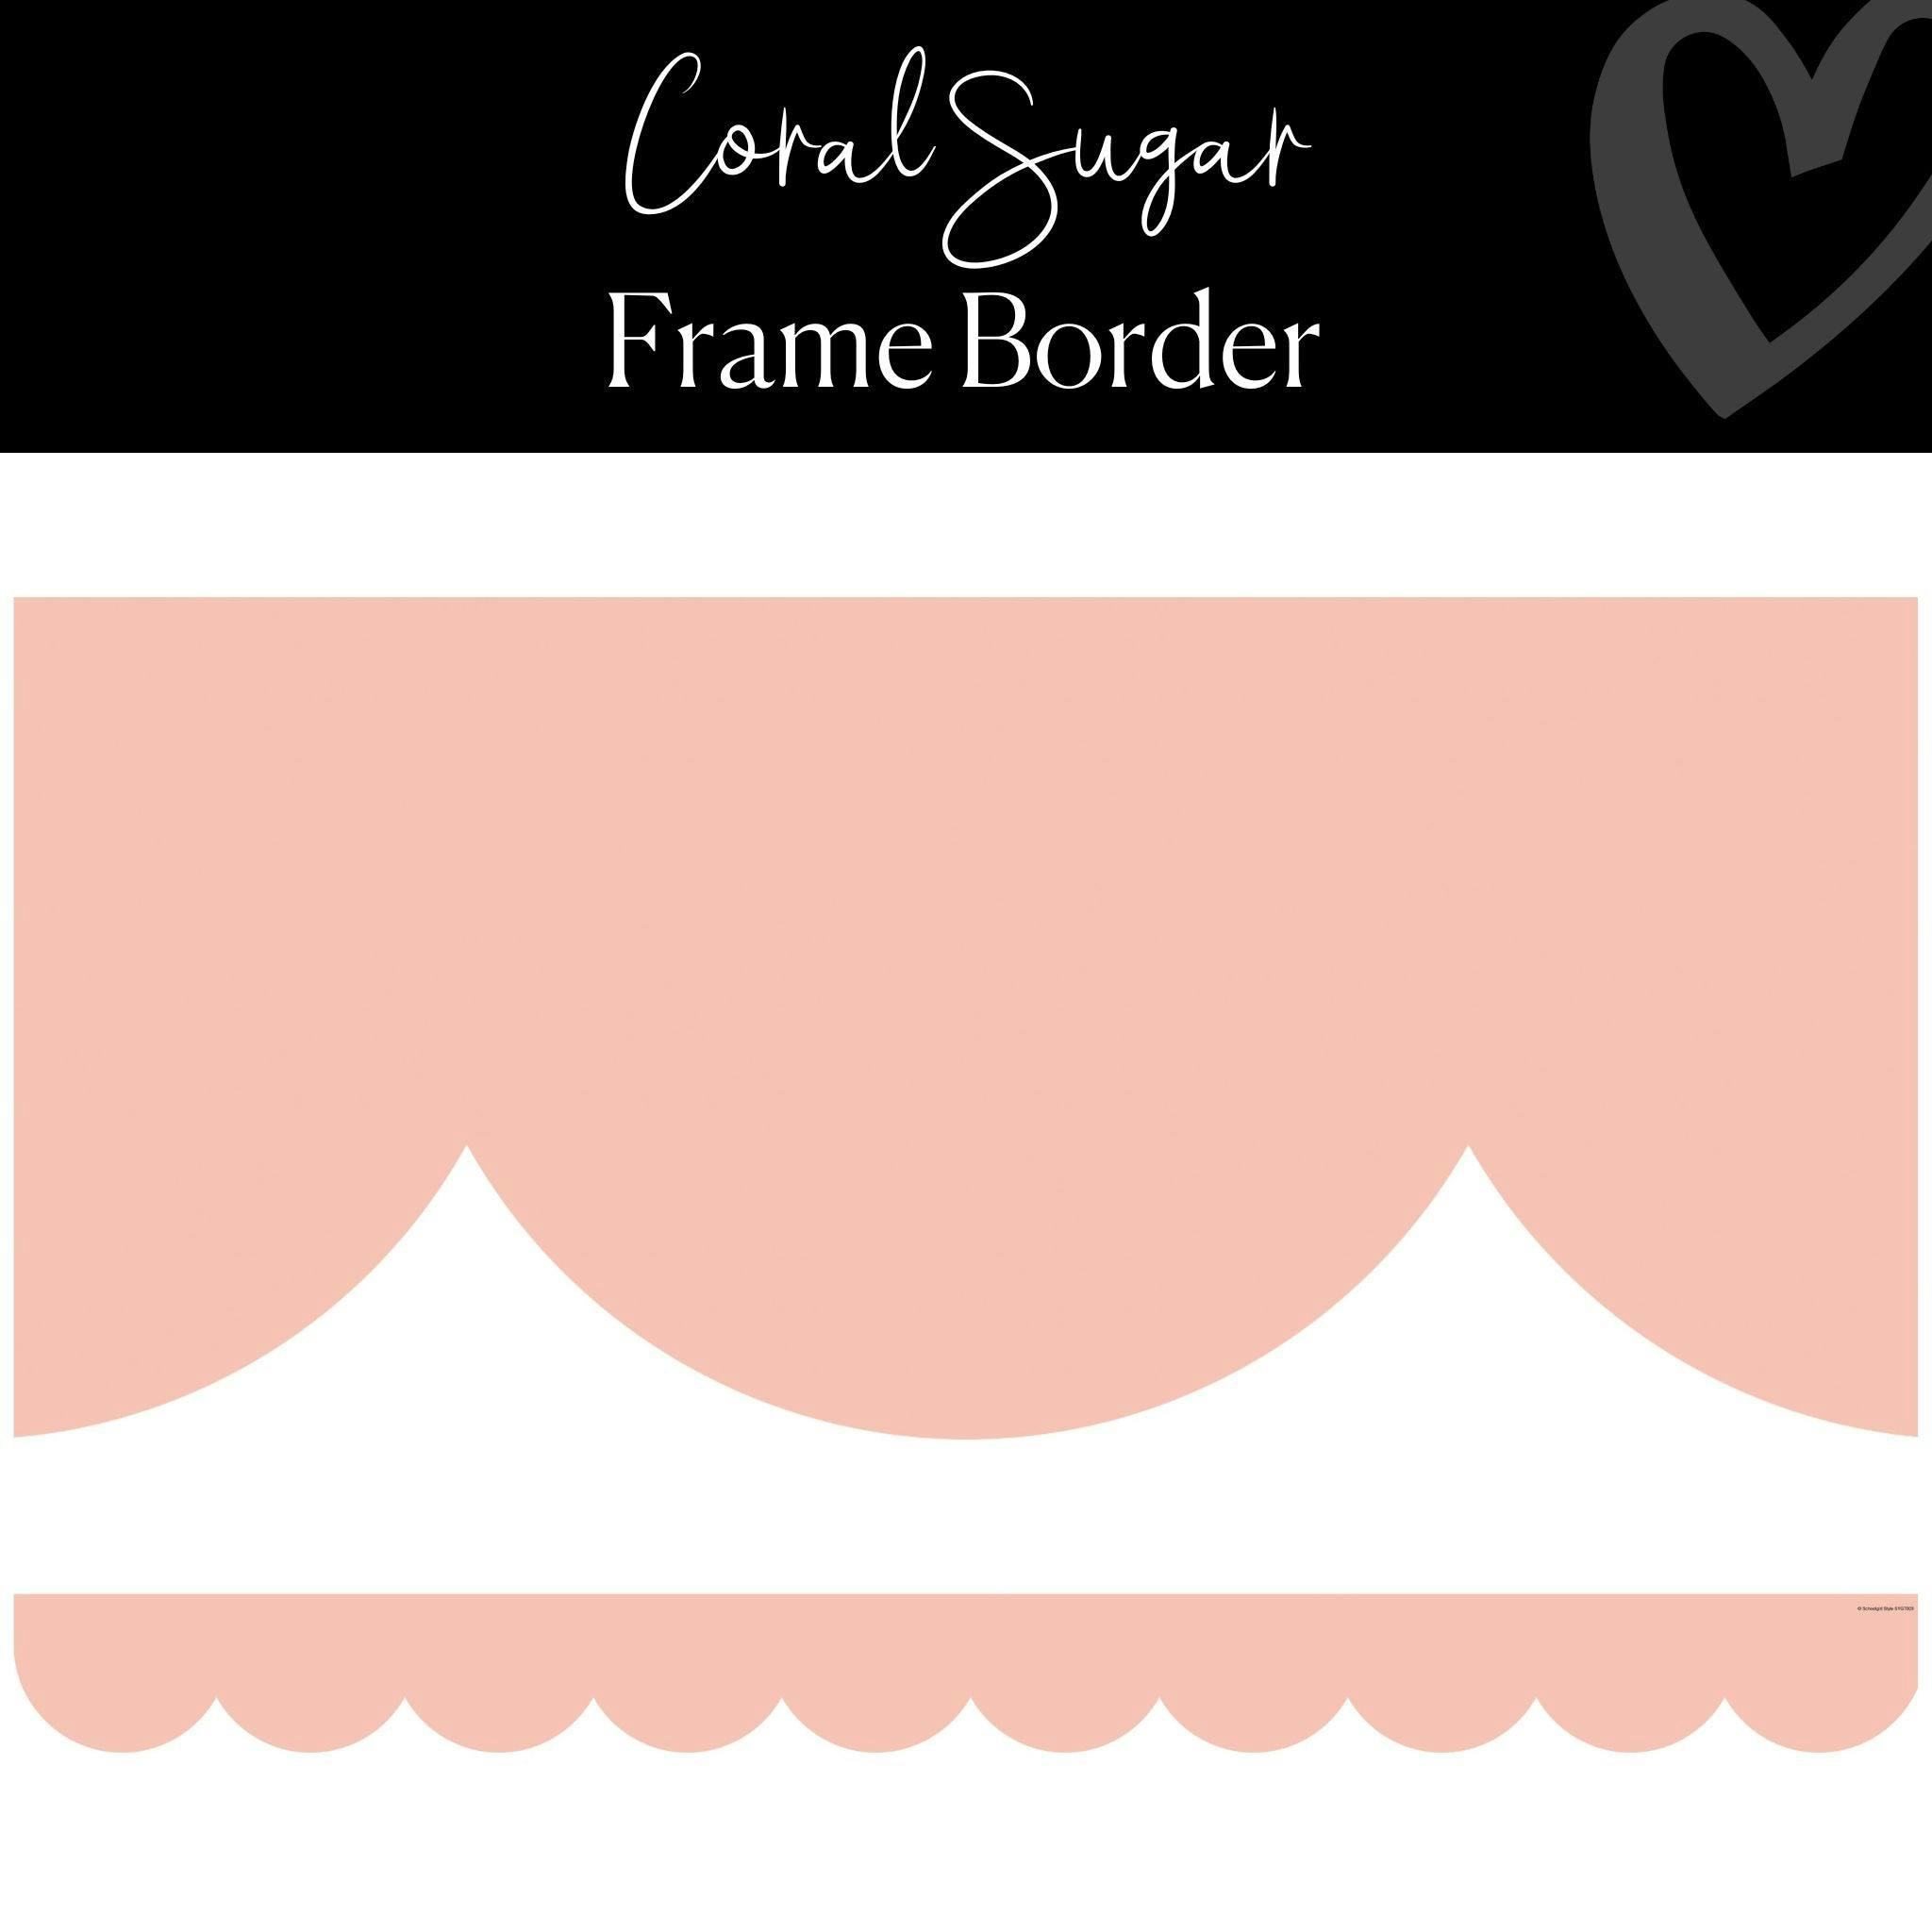 Coral Bulletin Board Border | "Coral Sugar" Frame Border | Groovy Classroom Decor | Schoolgirl Style